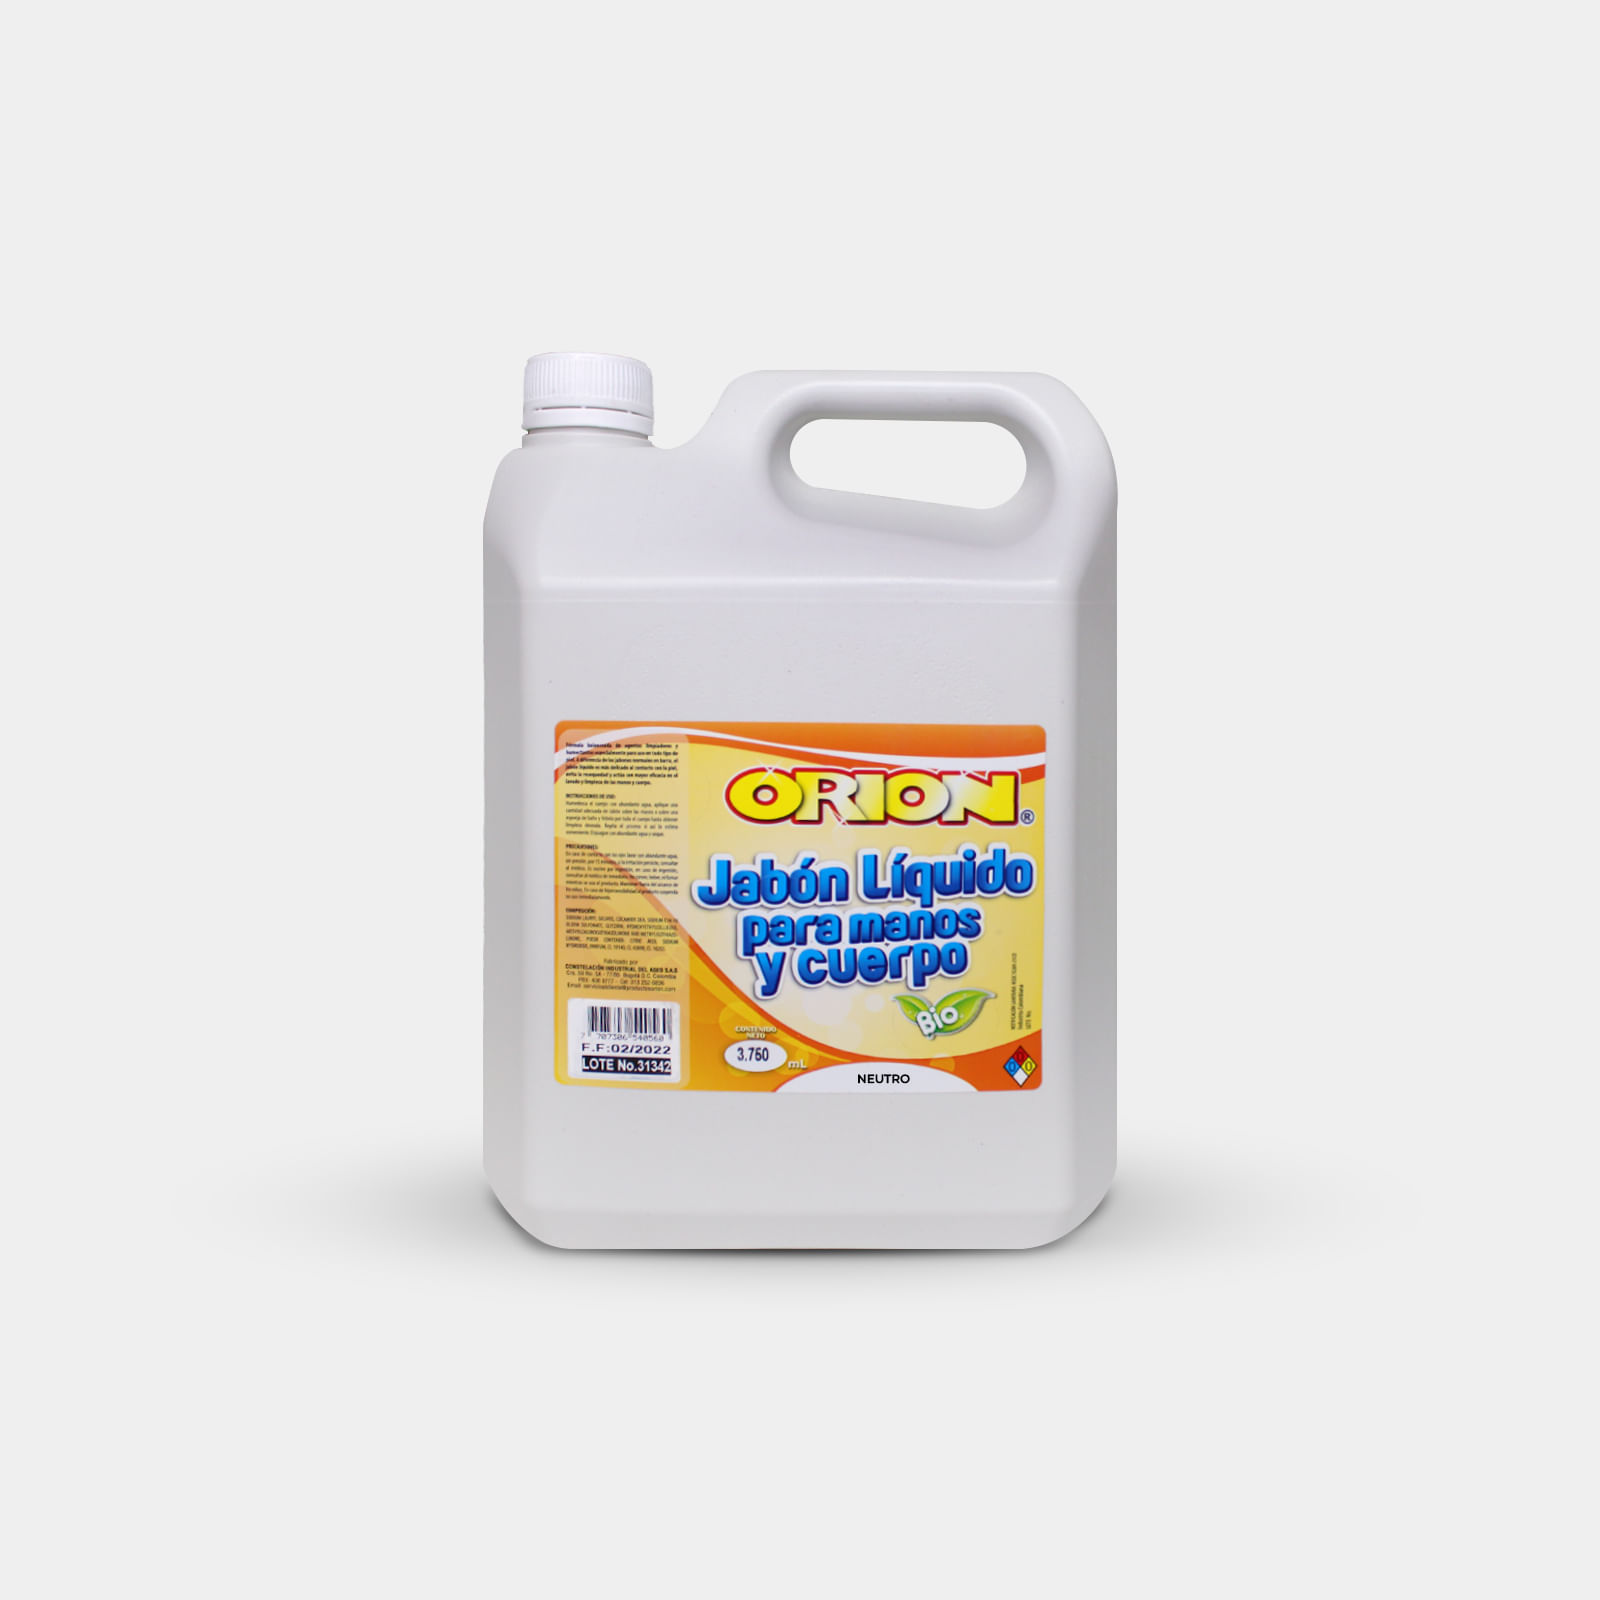 Detergente para lavadora ORION x 1000